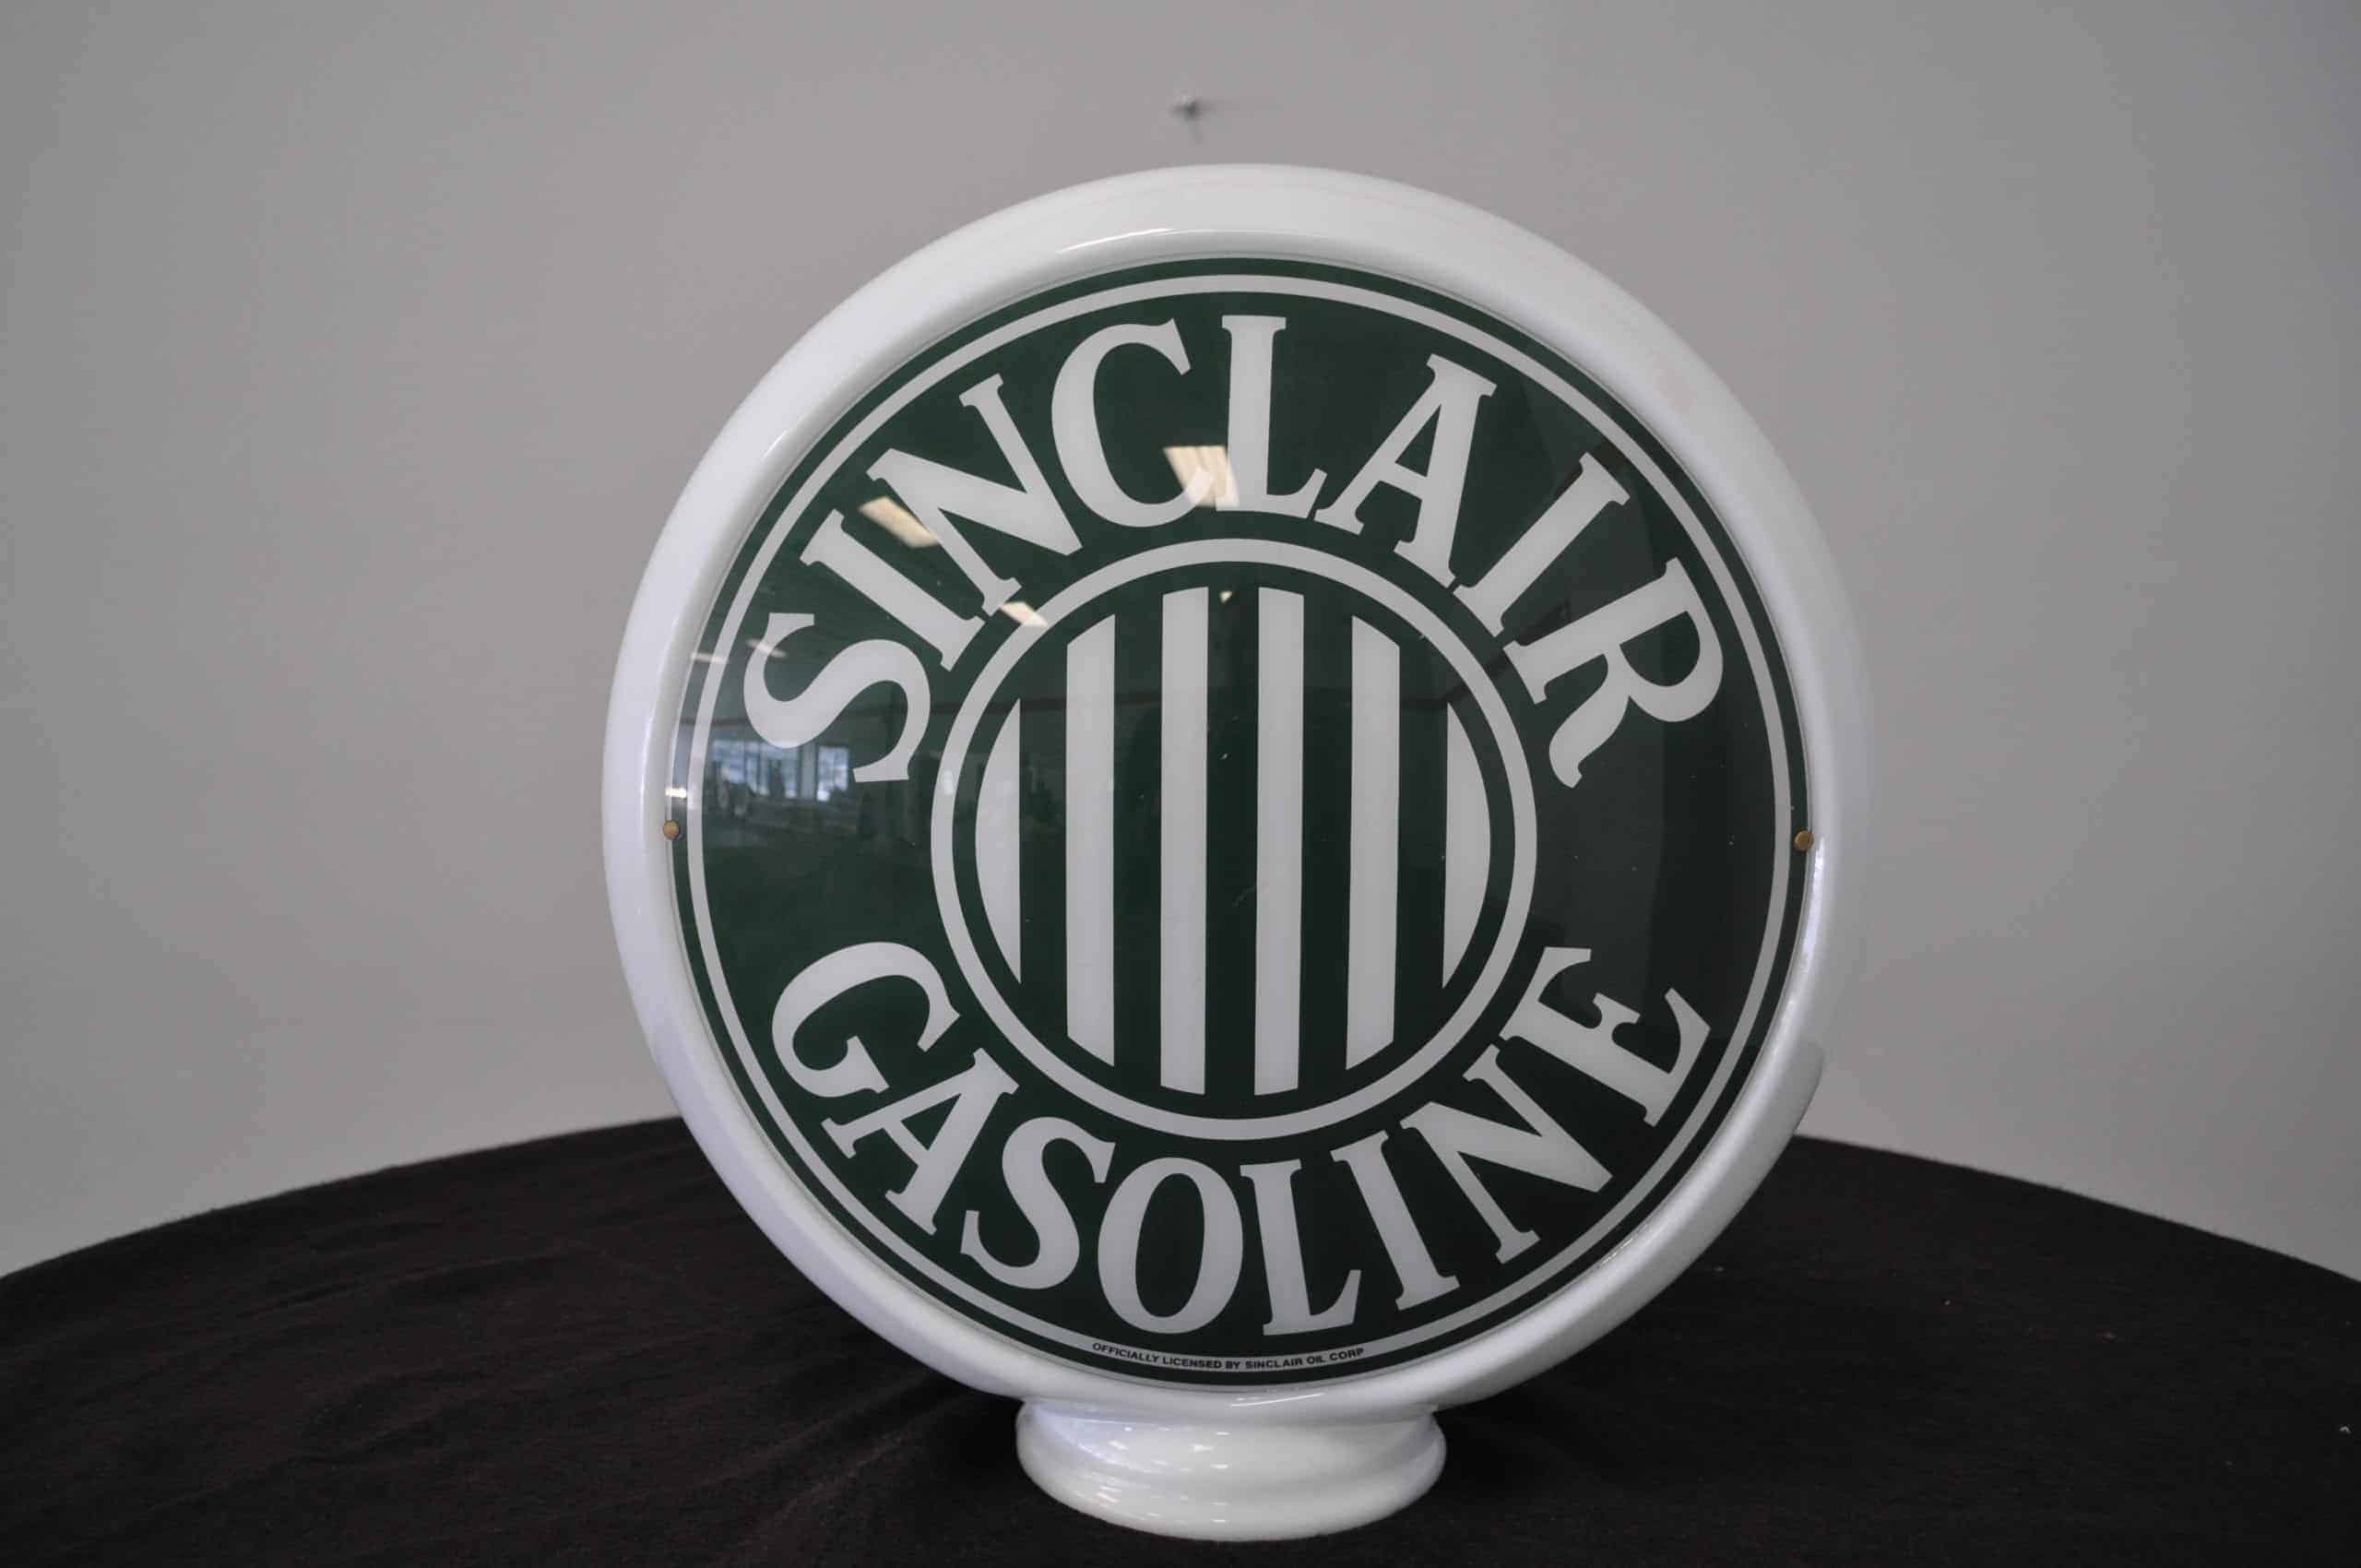 Sinclair Gasoline Globe